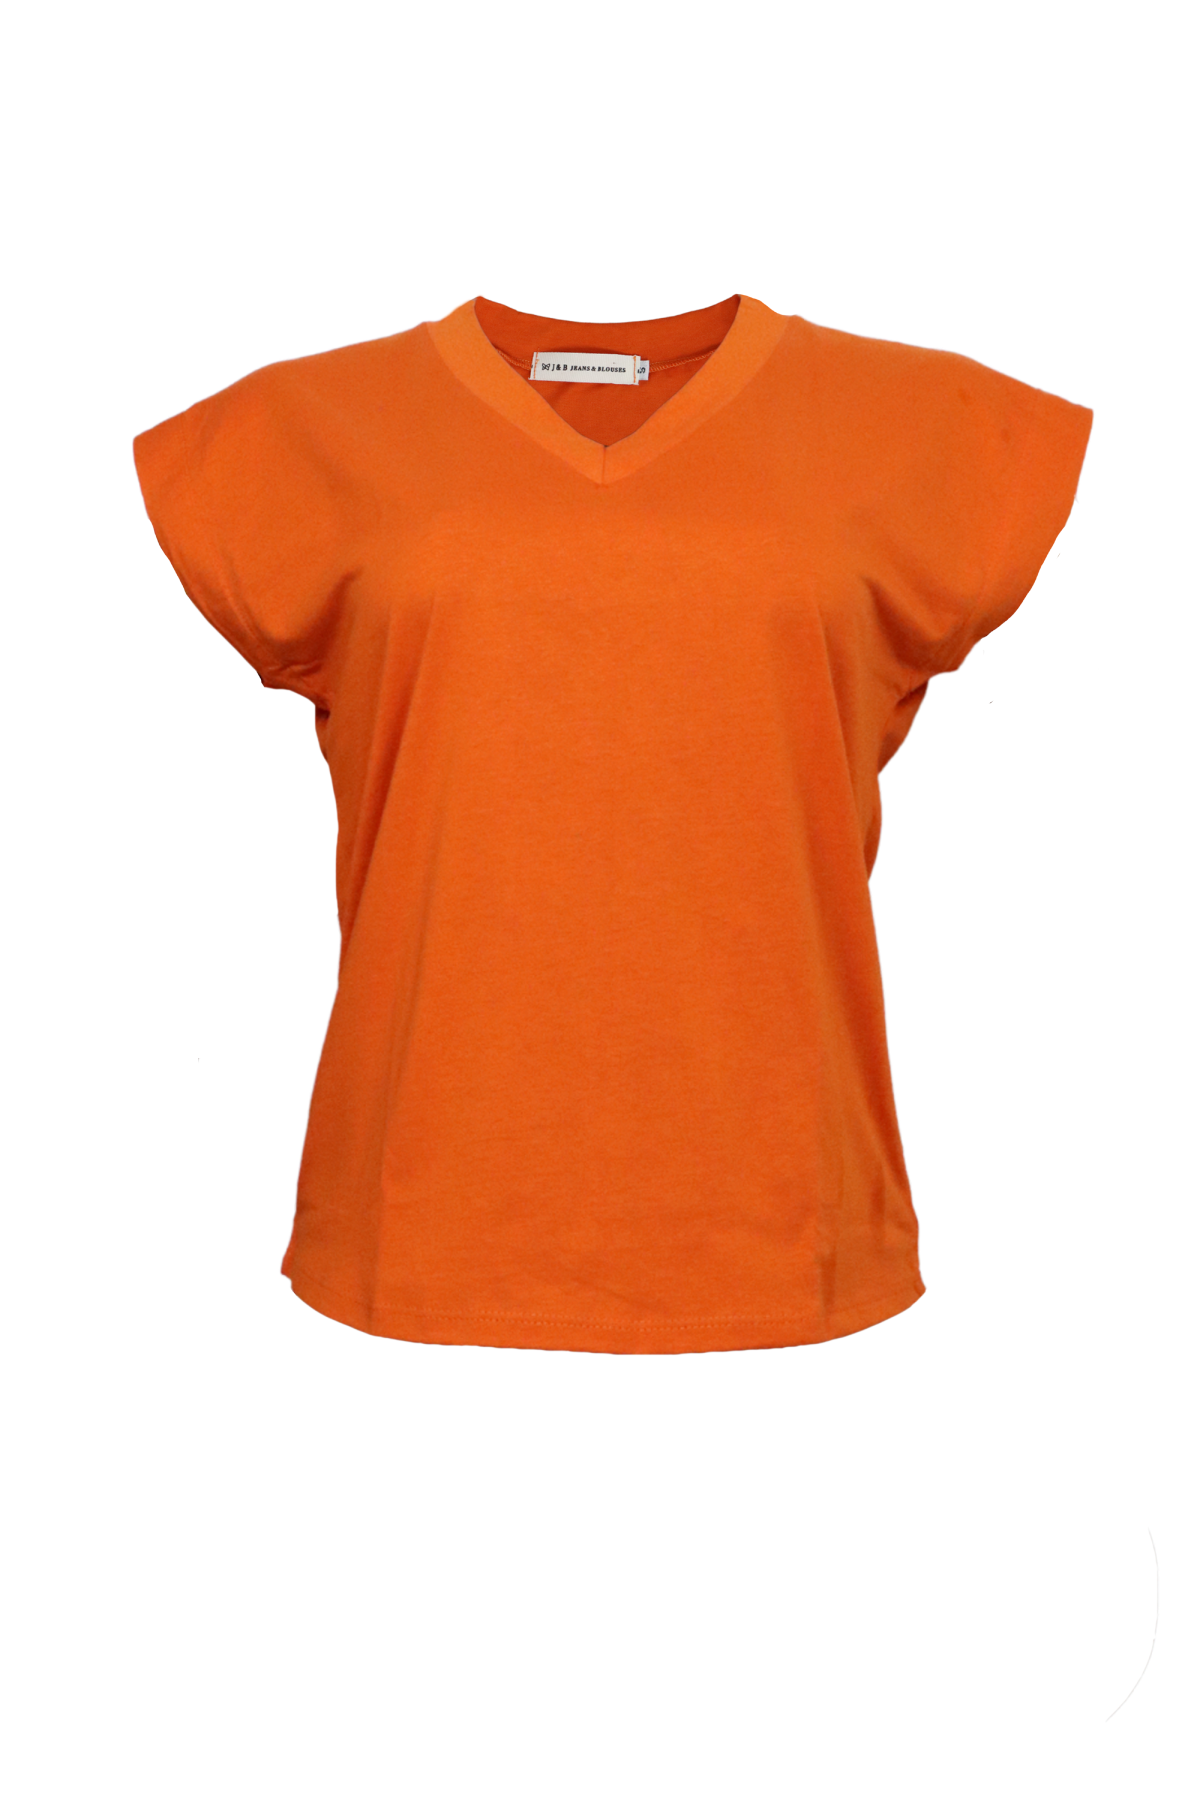 Camiseta anaranjada de manga rodada.